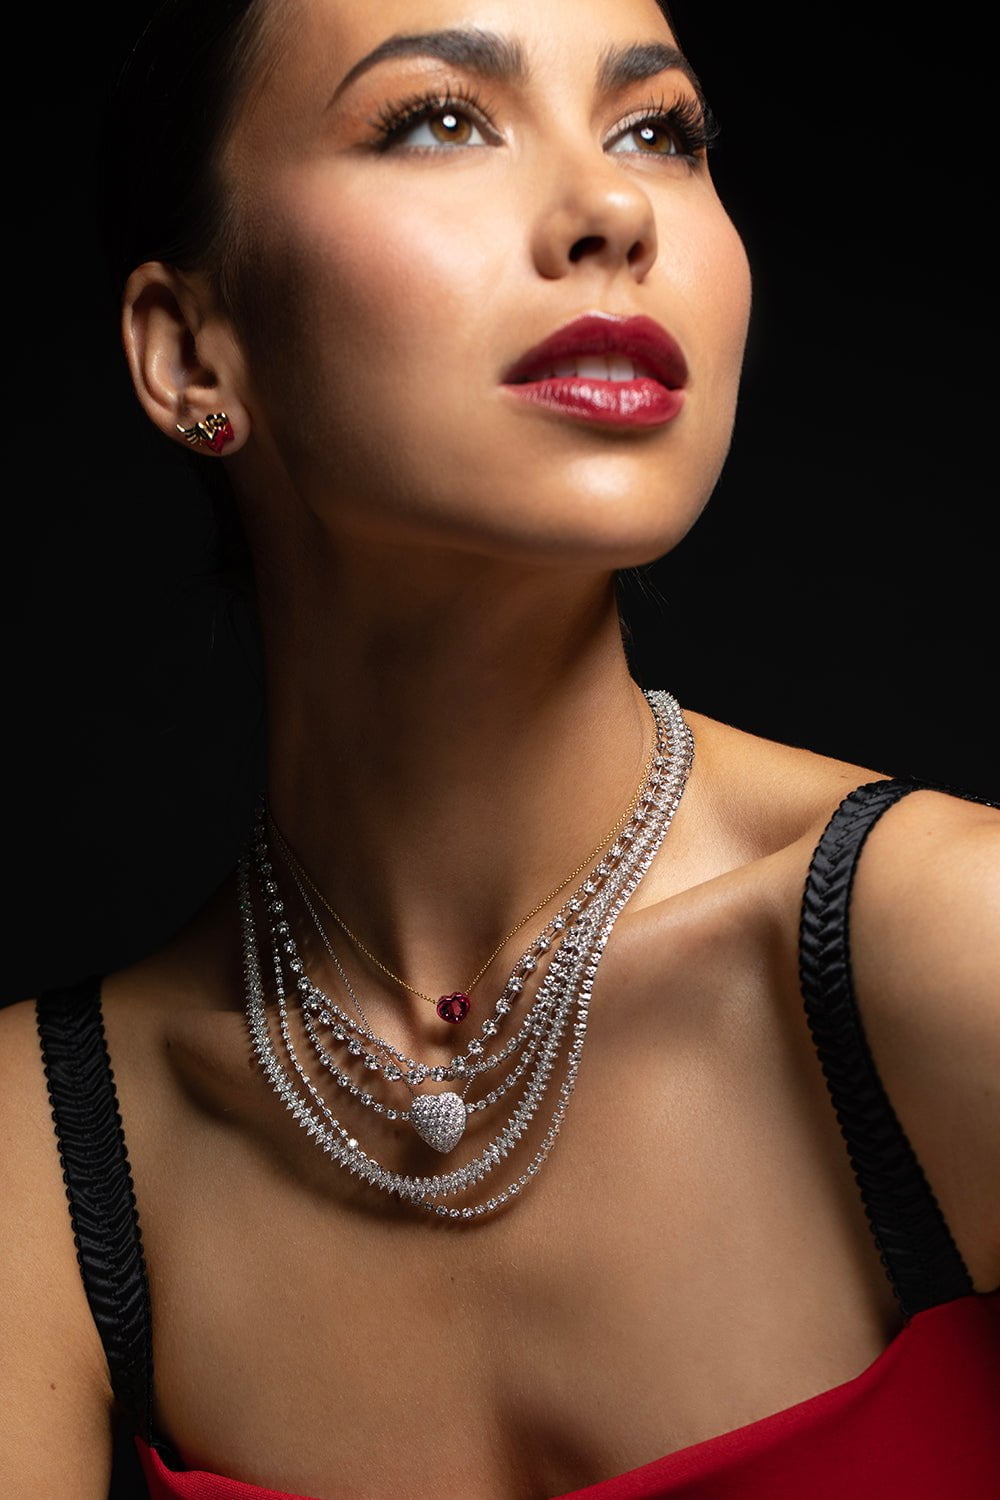 KWIAT-Pave Diamond Heart Pendant Necklace-WHITE GOLD